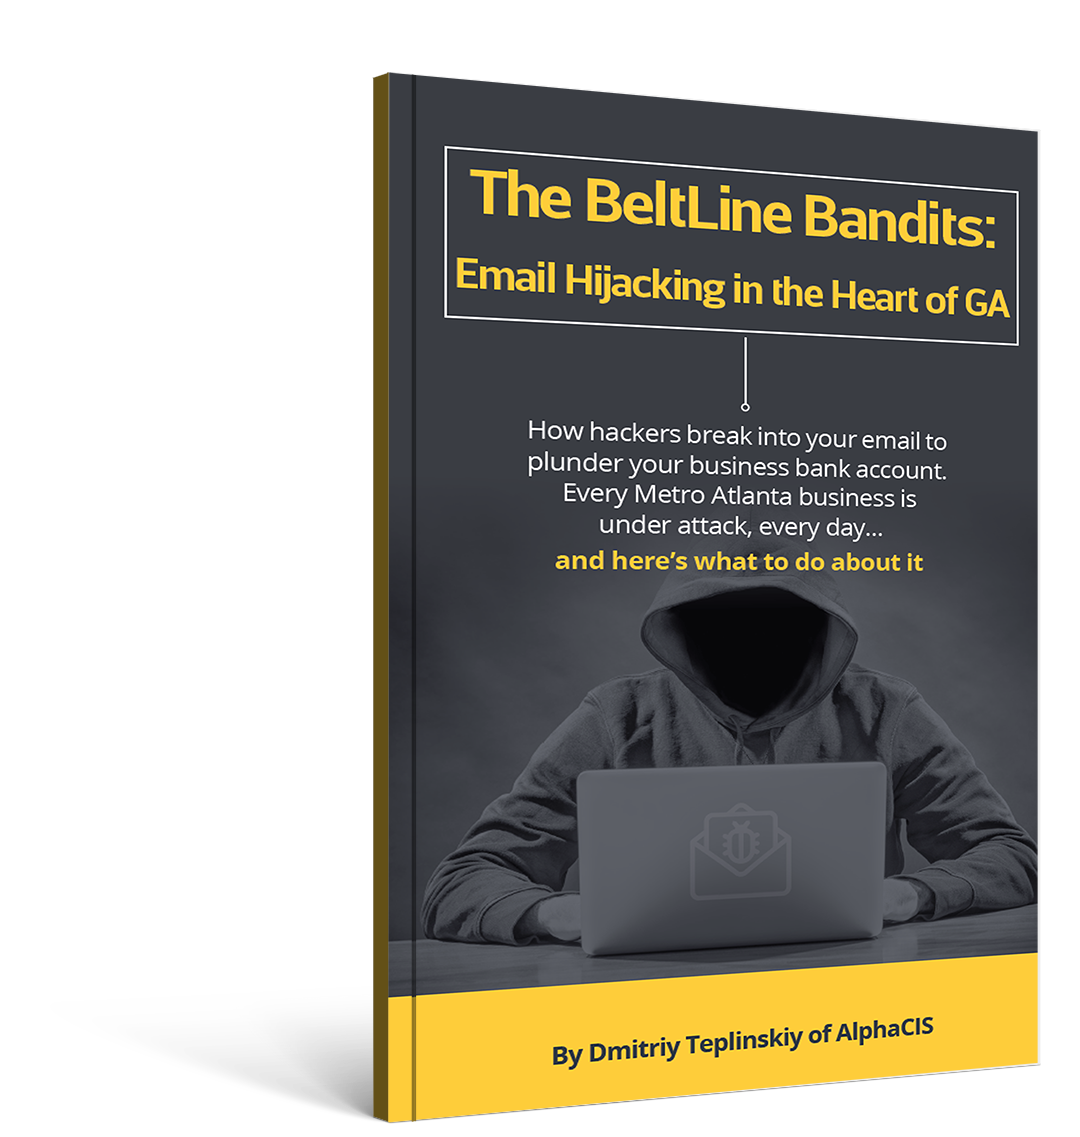 beltline bandits book